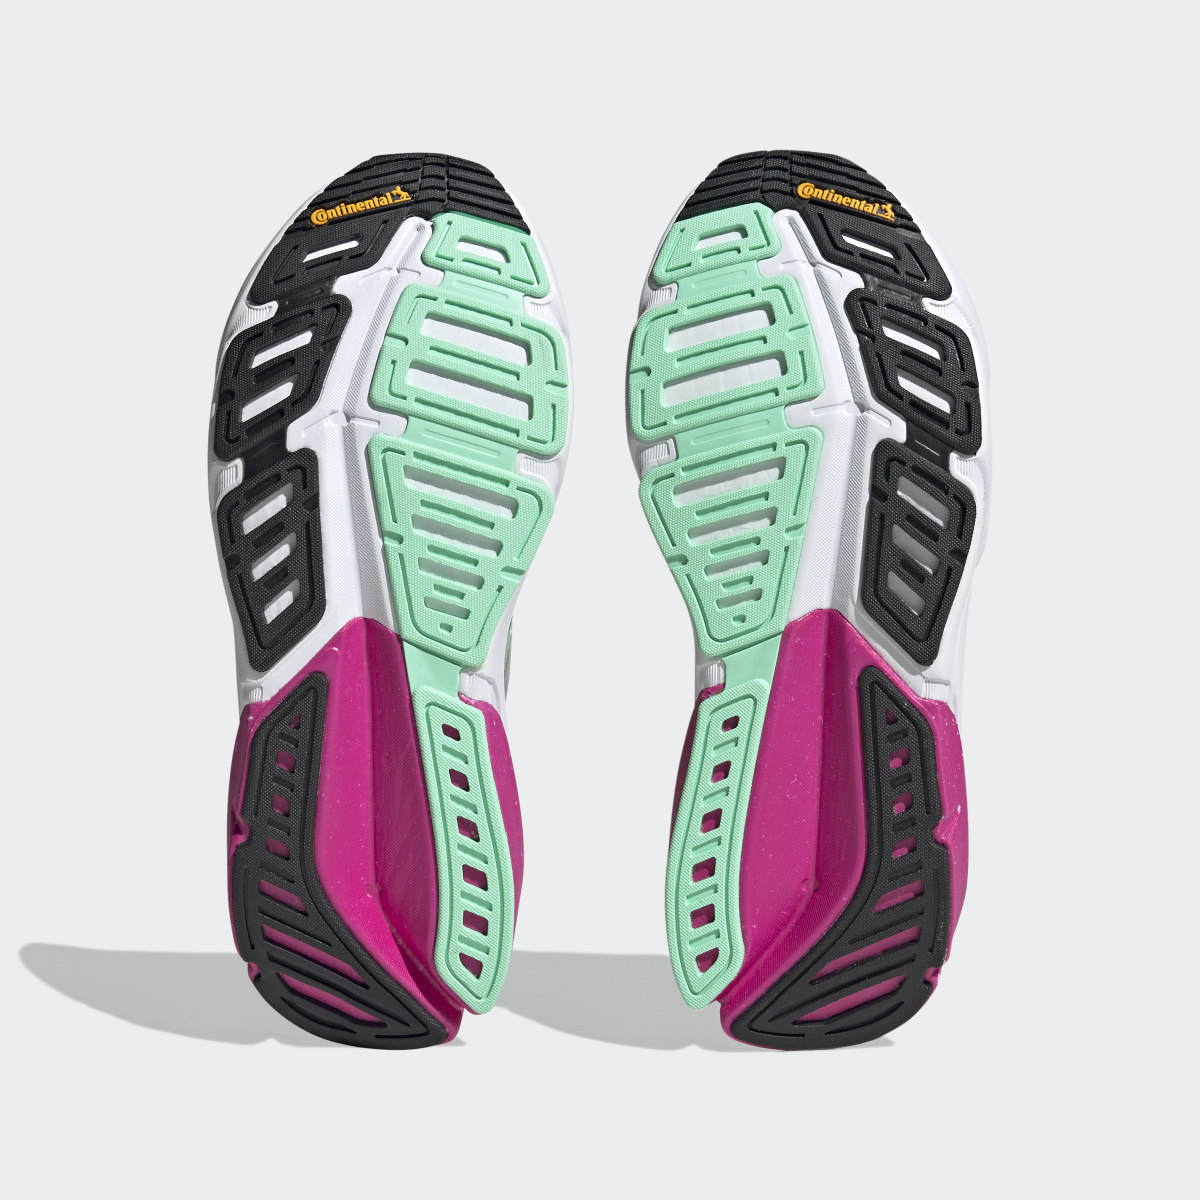 Adidas Scarpe adistar 2.0. 7